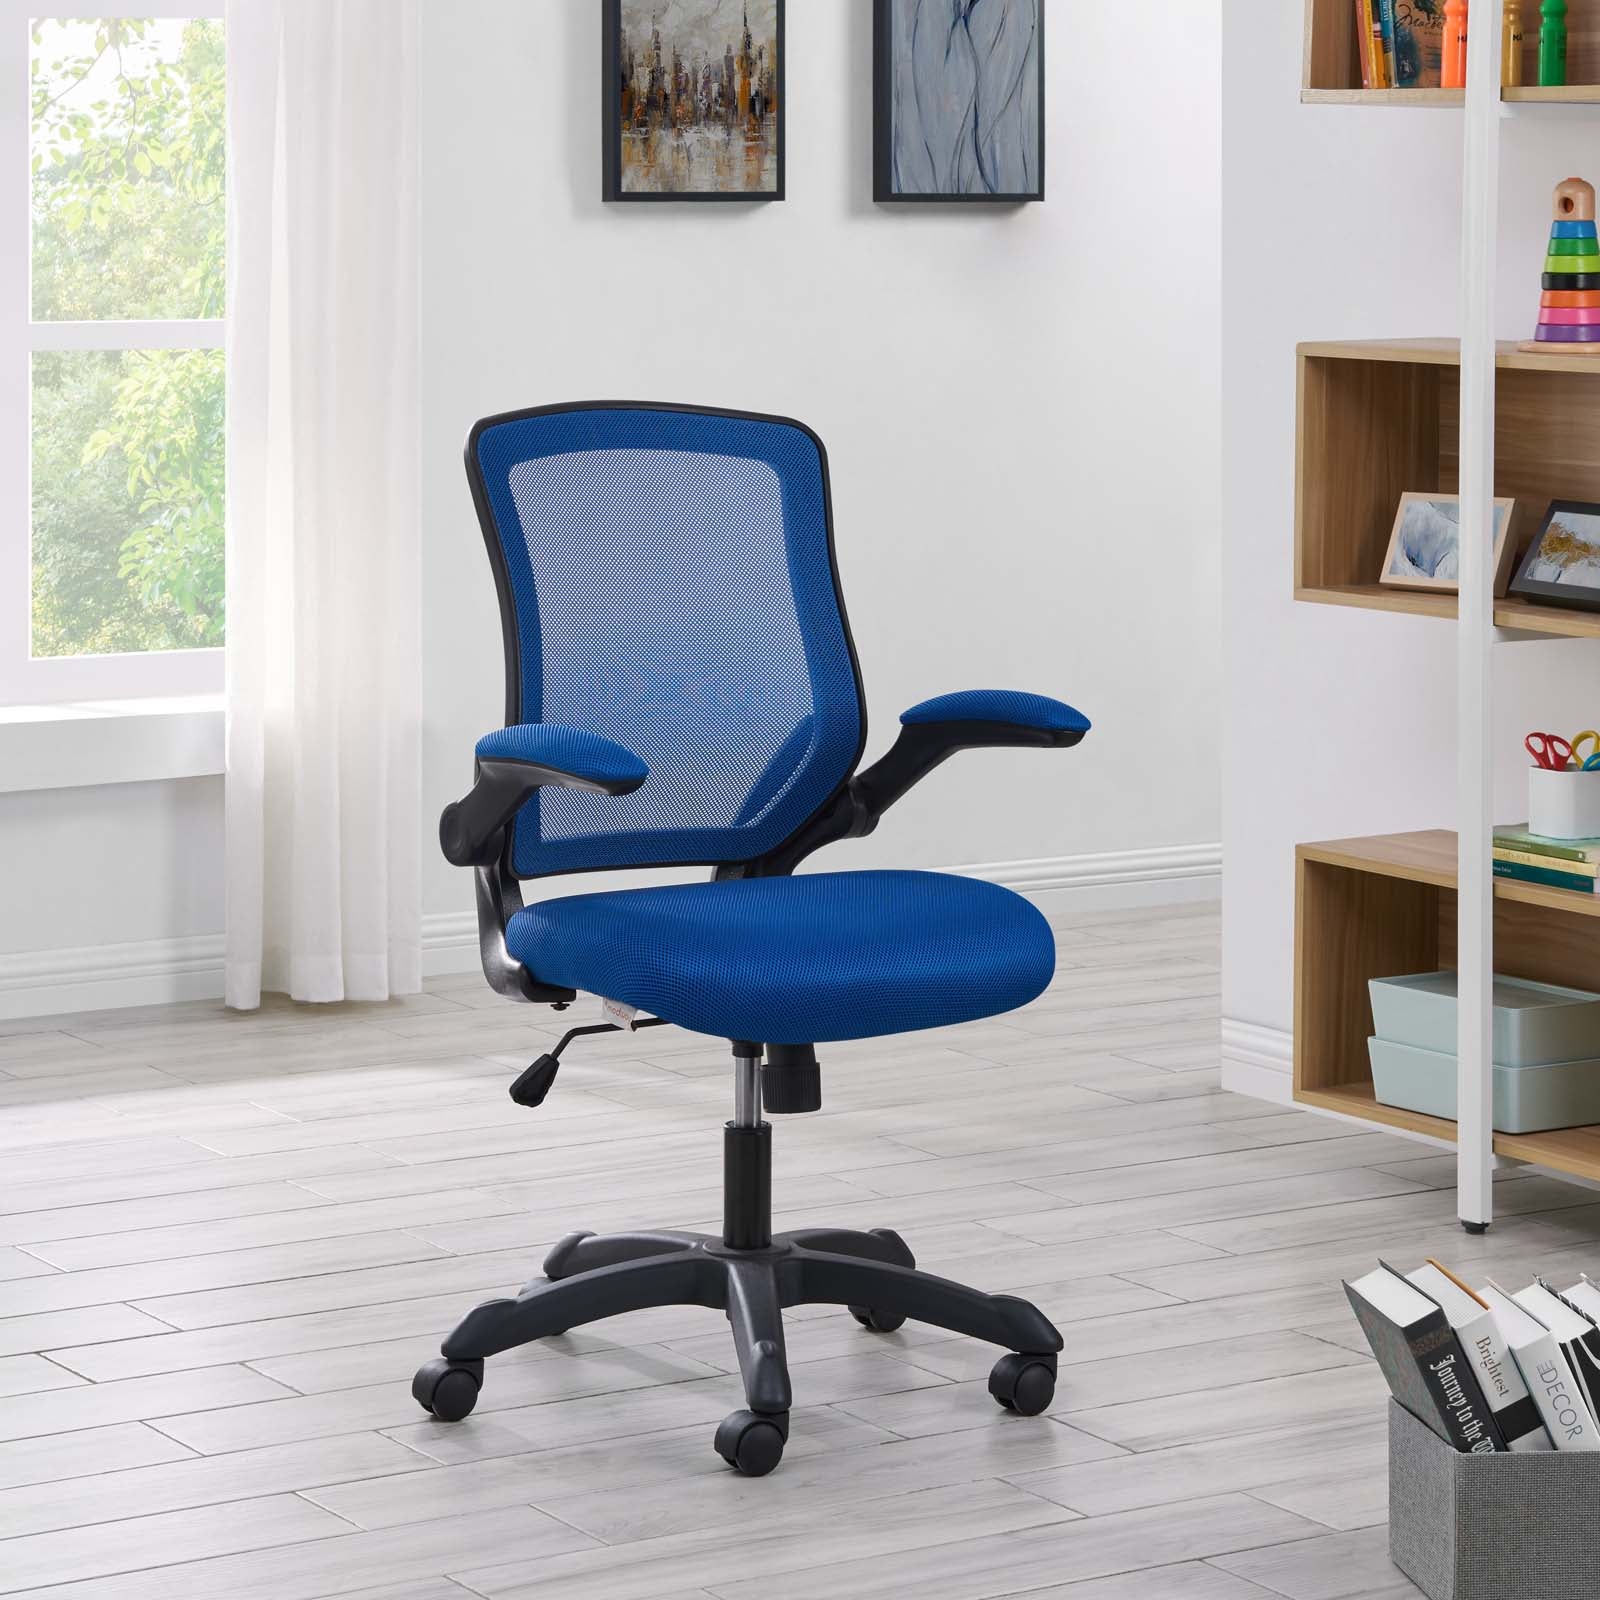 Veer Mesh Office Chair - East Shore Modern Home Furnishings